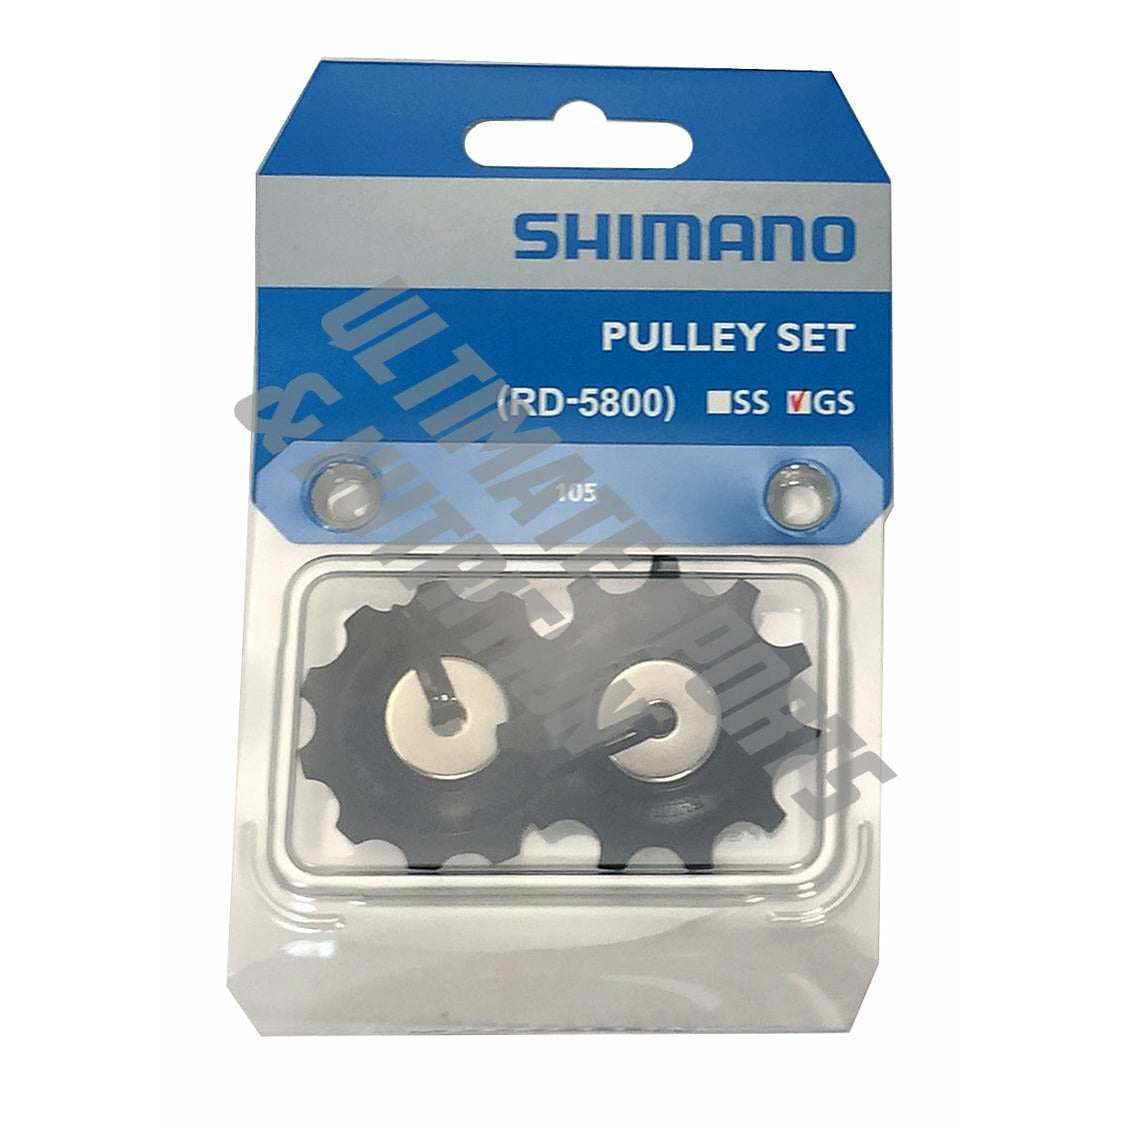 Shimano 105 RD-5800 GS Rear Derailleur Tension and Guide Jockey Pulley Set